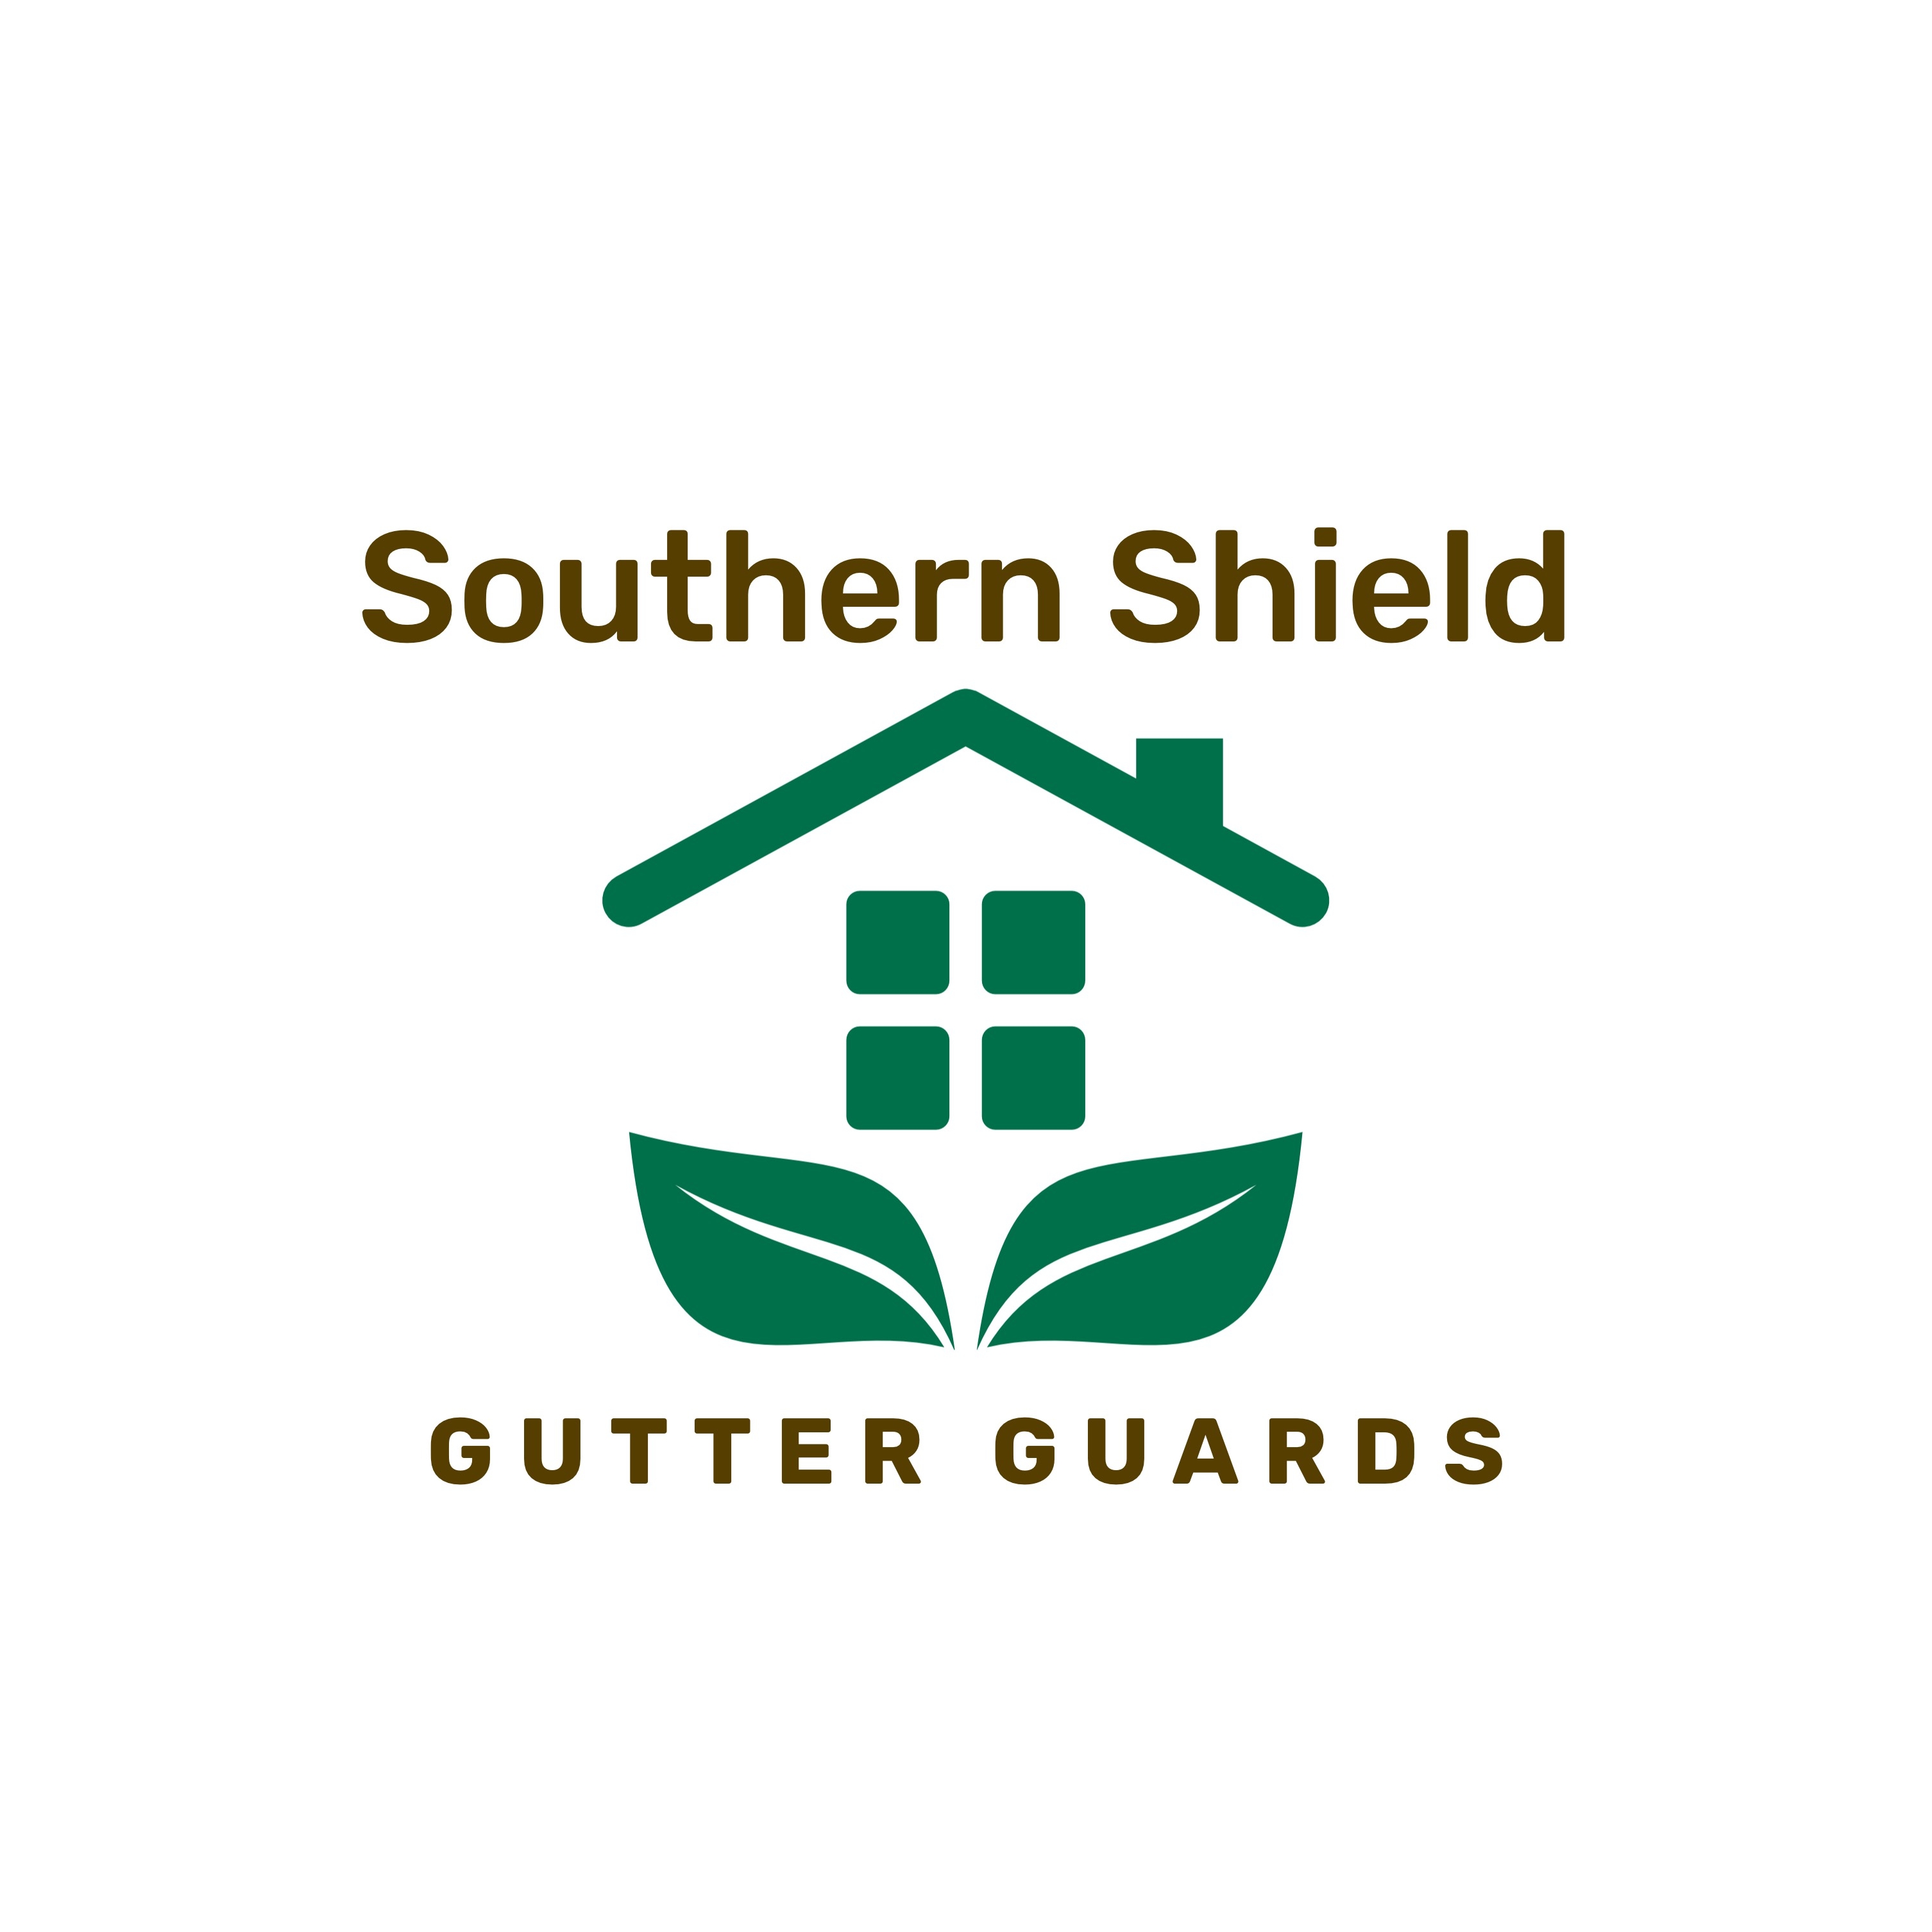 Southern Shield Gutter Guards